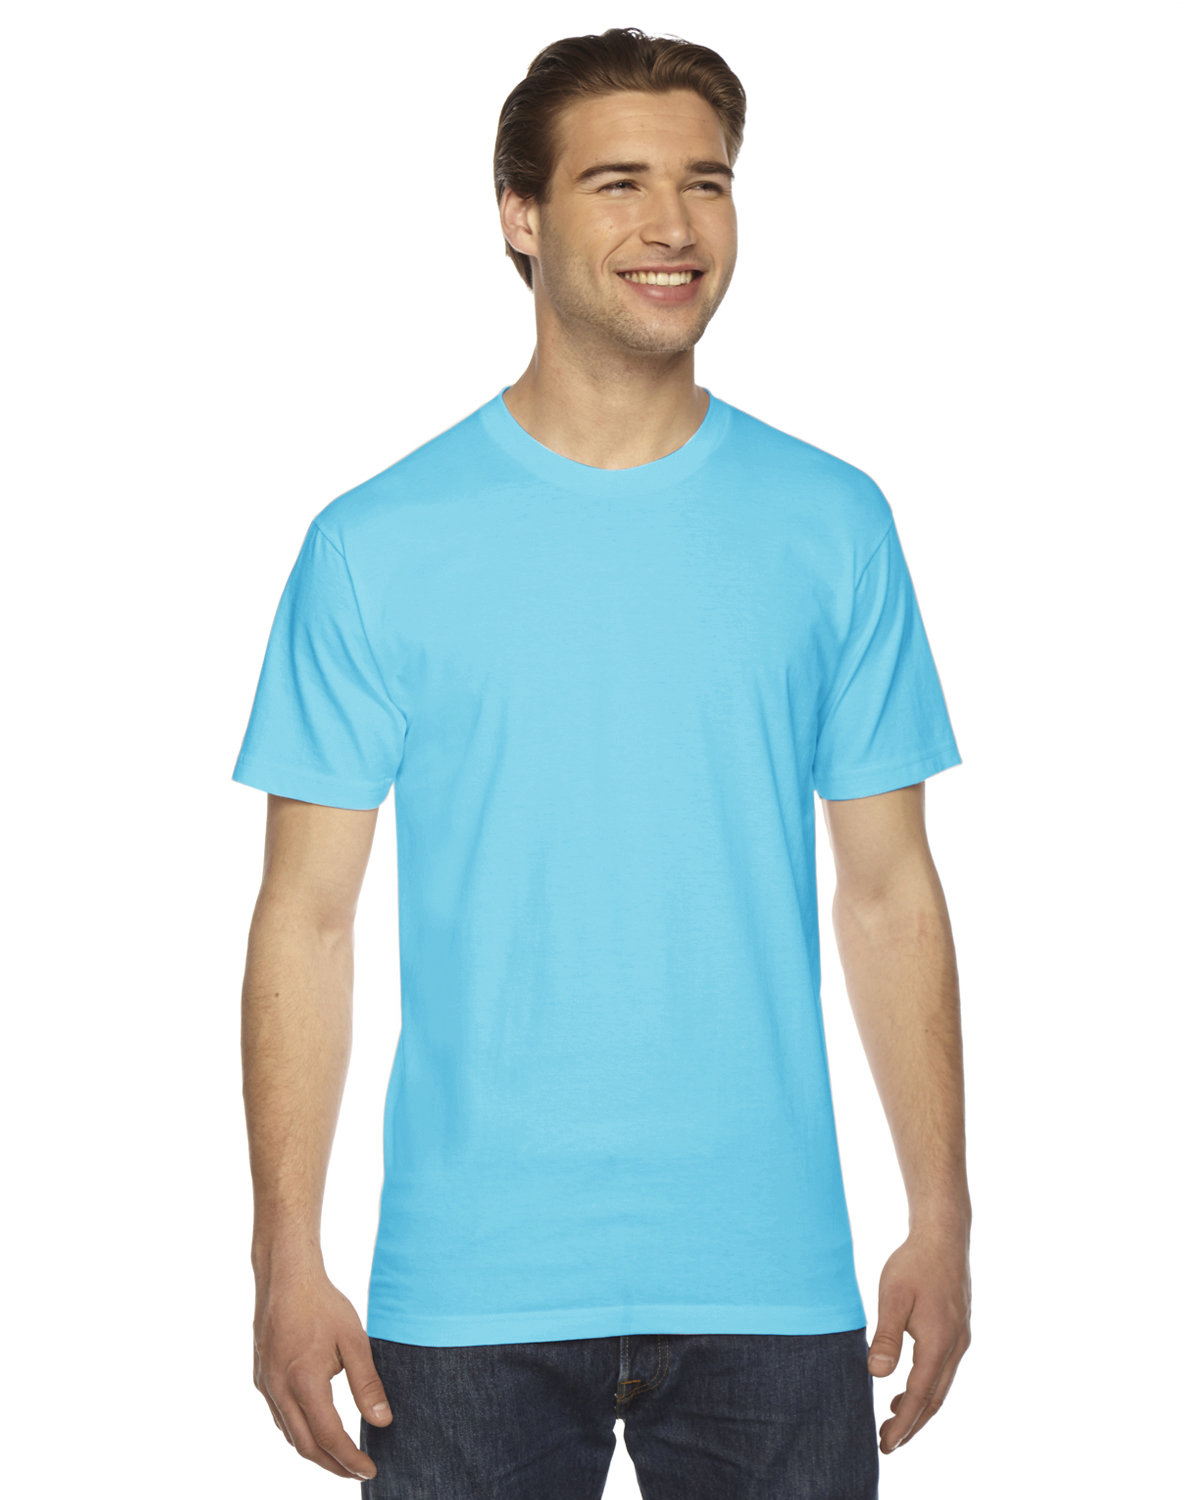 American Apparel Unisex Fine Jersey Short-Sleeve T-Shirt TURQUOISE 